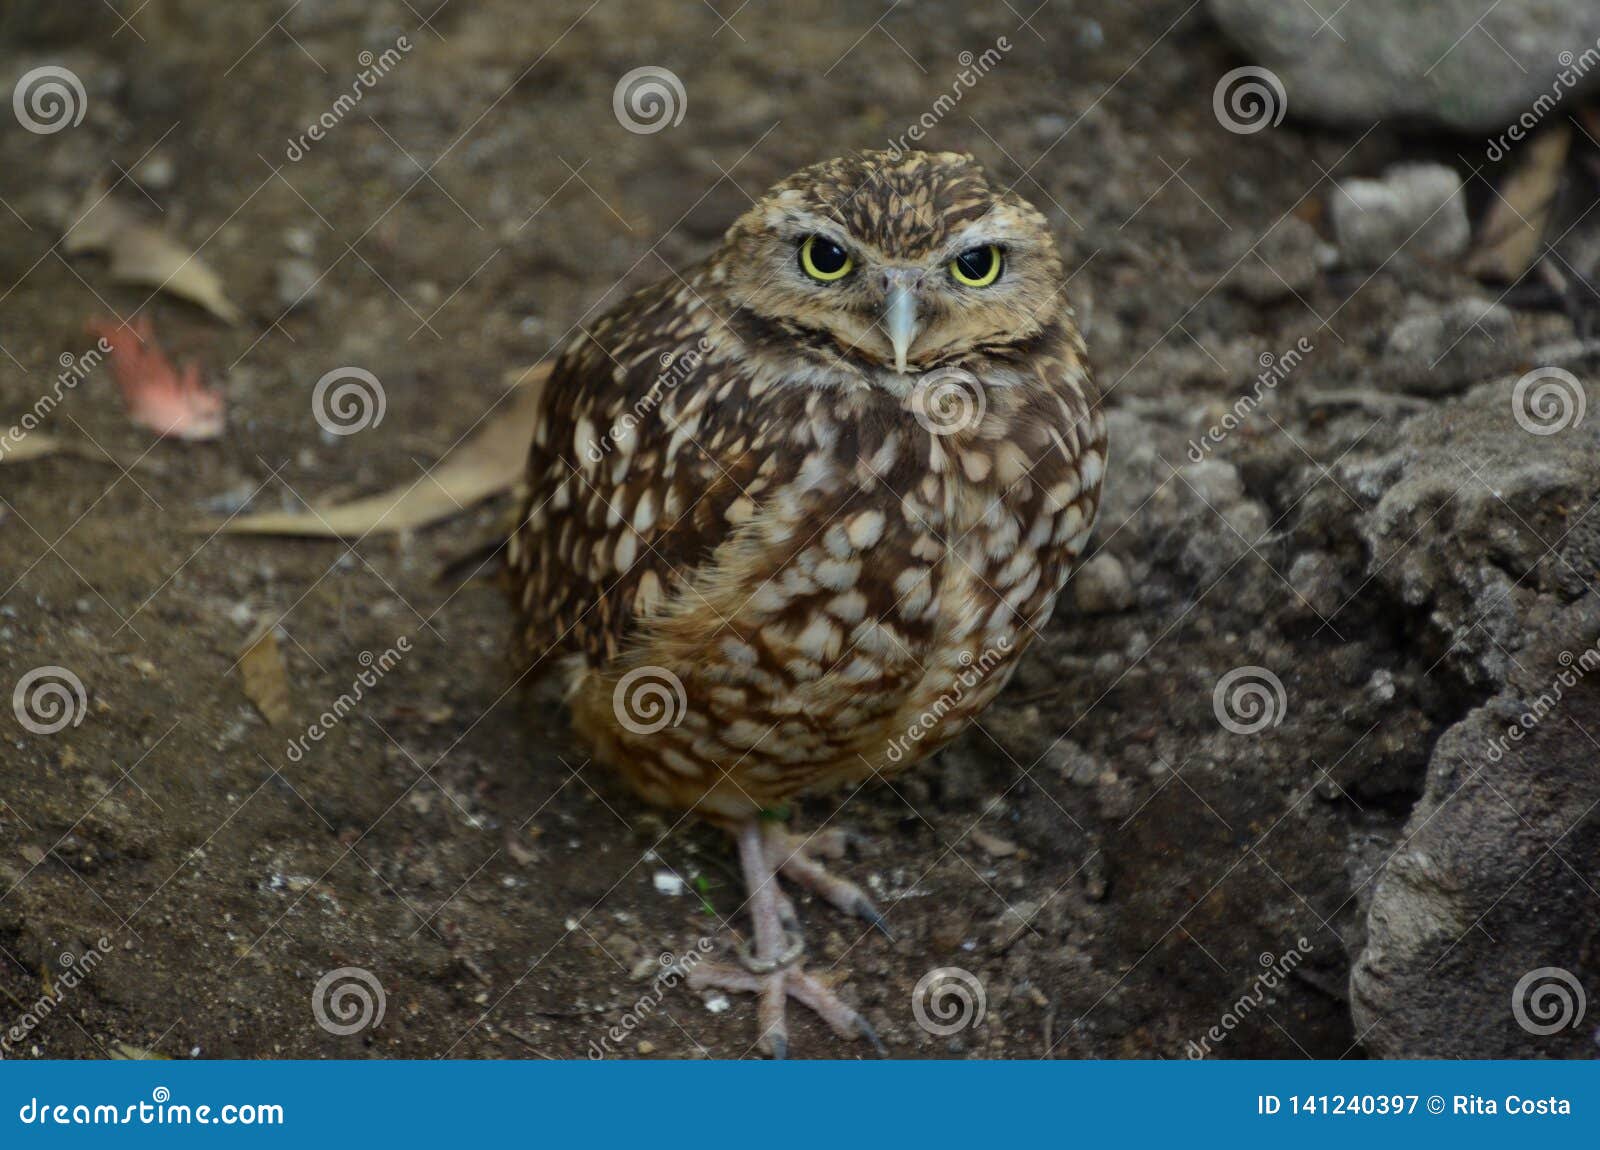 camouflaged owl